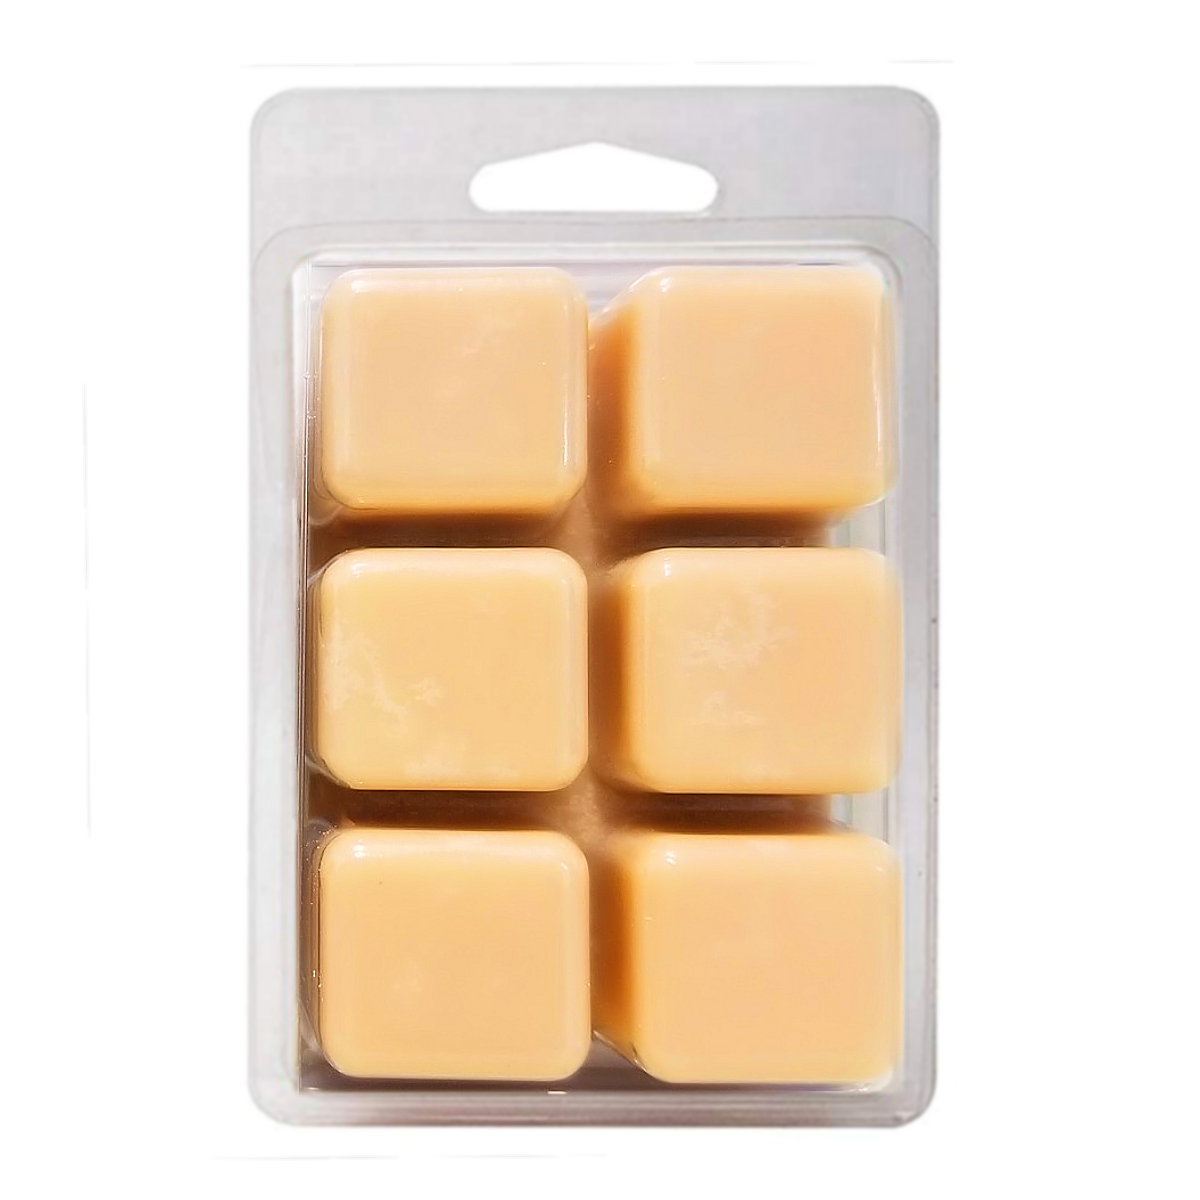 Apple Butter - 3.2 oz Clamshell